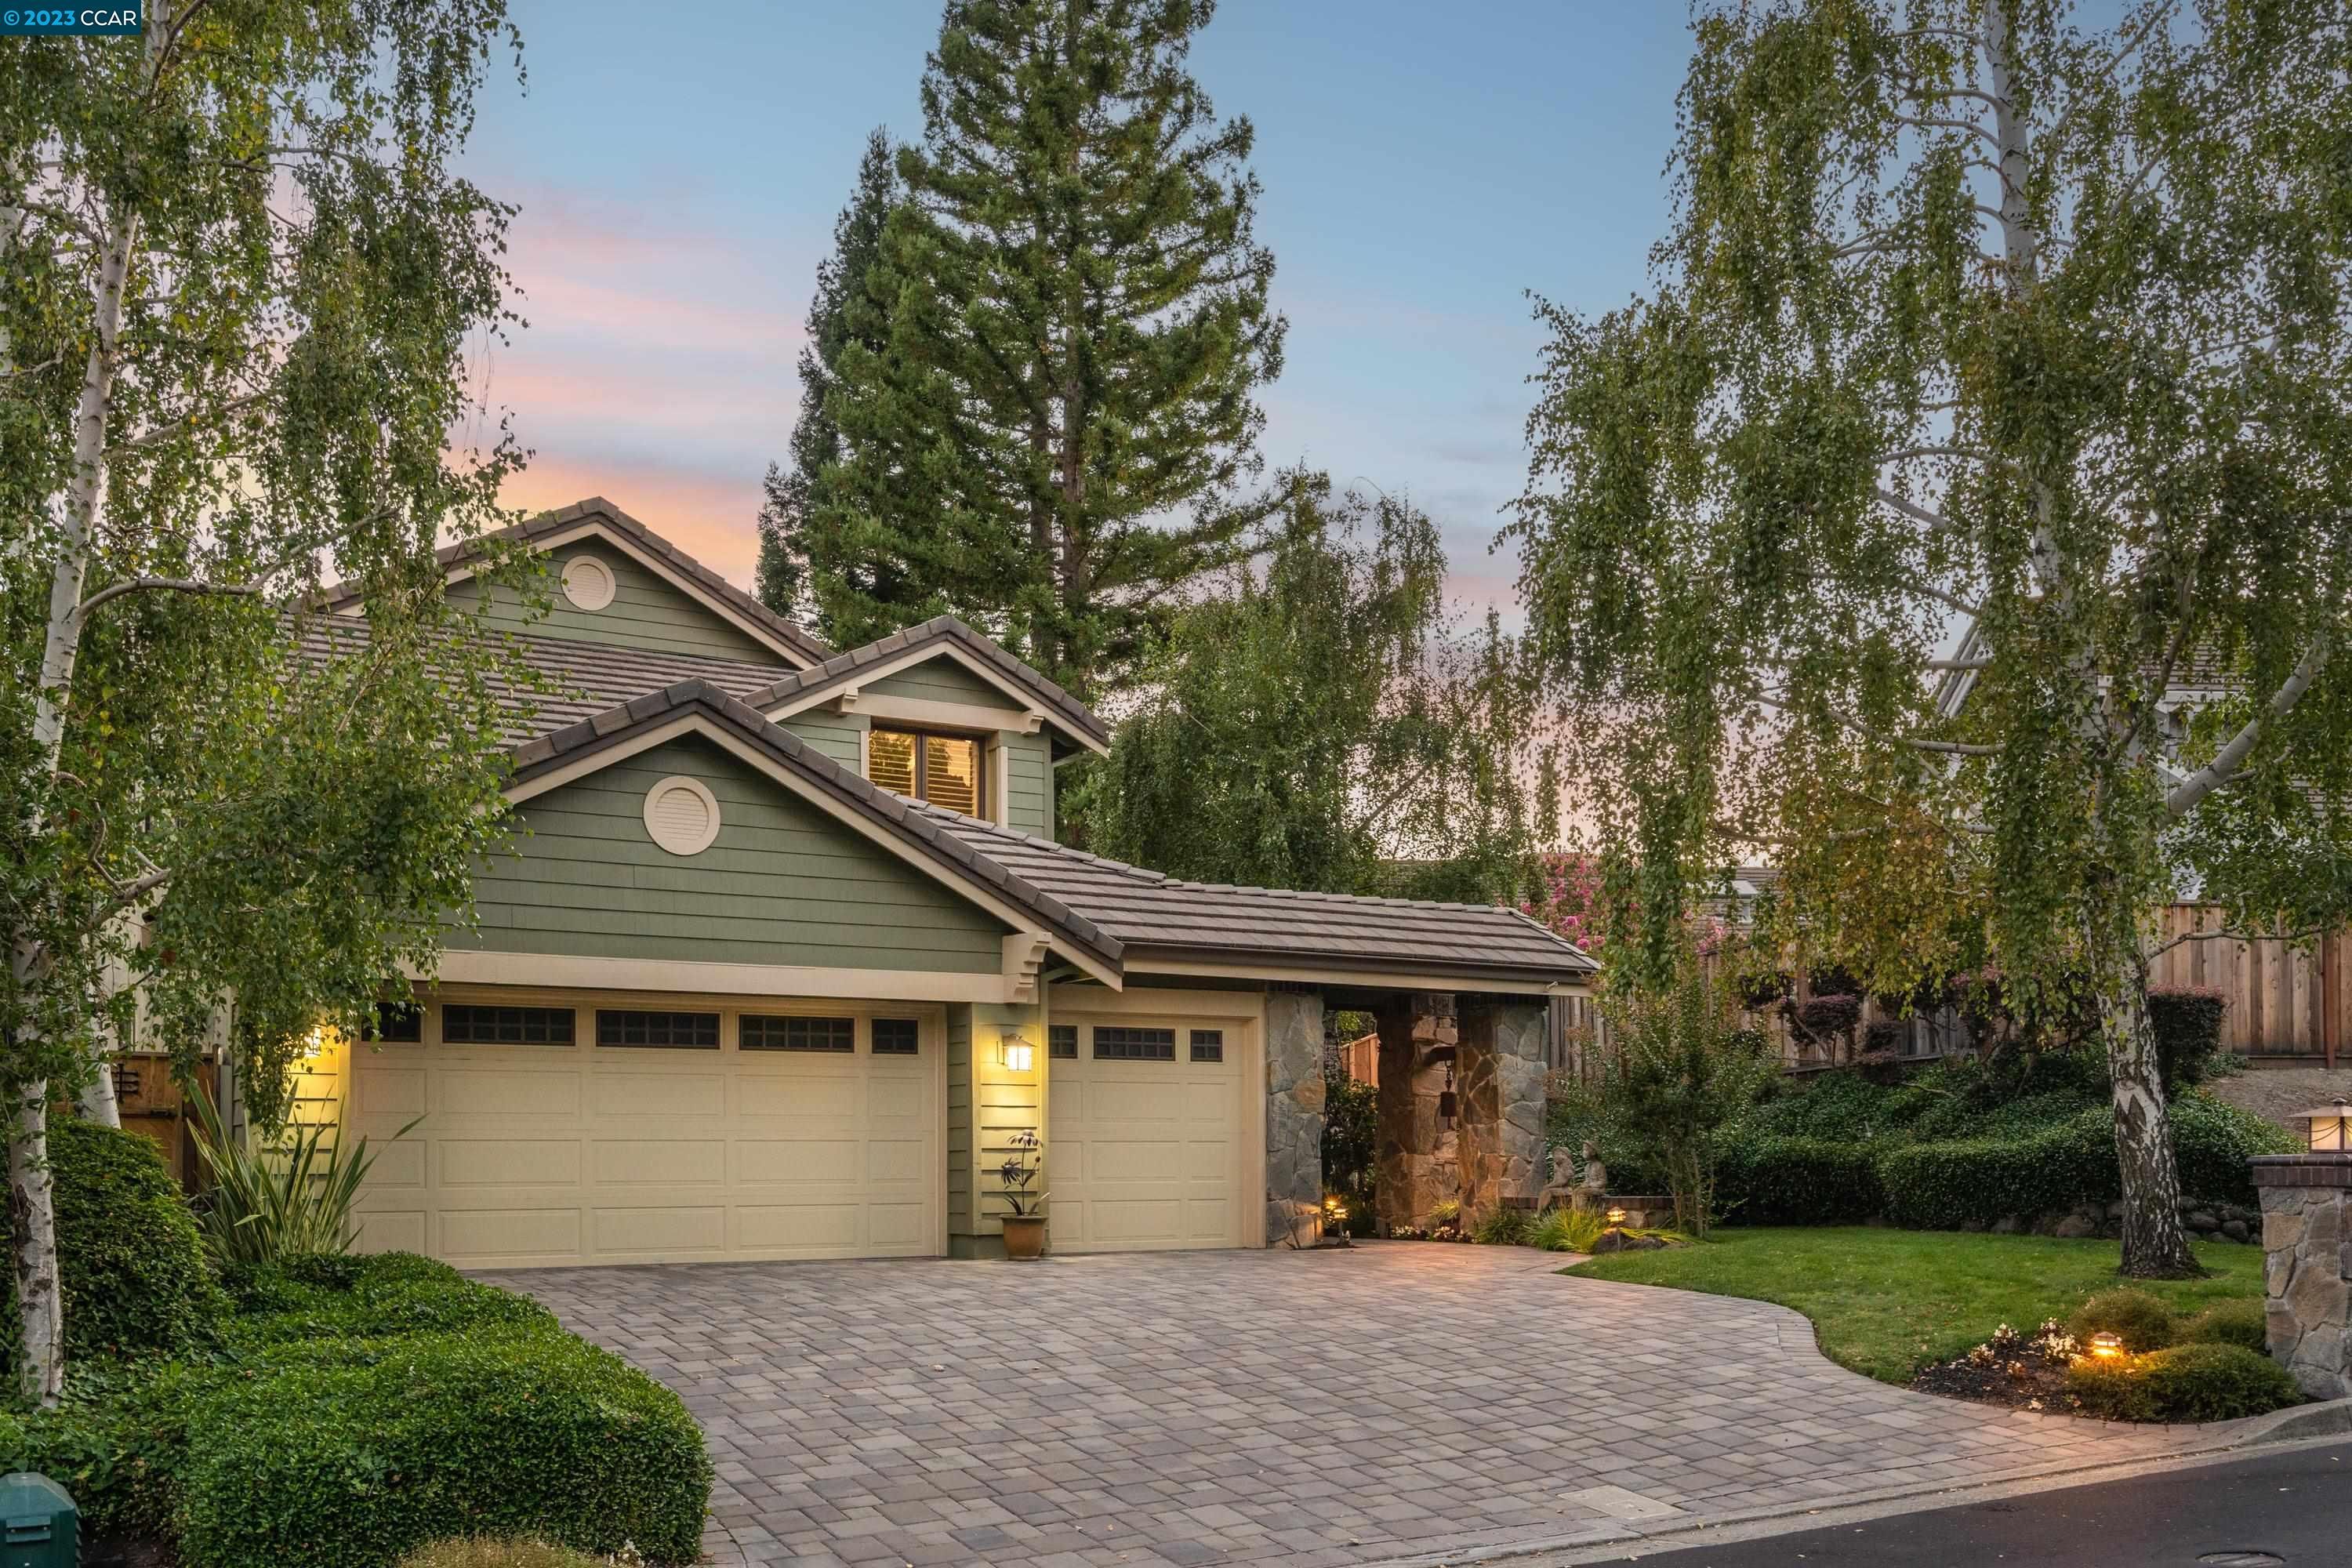 Blackhawk Country Club - Danville, CA Homes for Sale & Real Estate